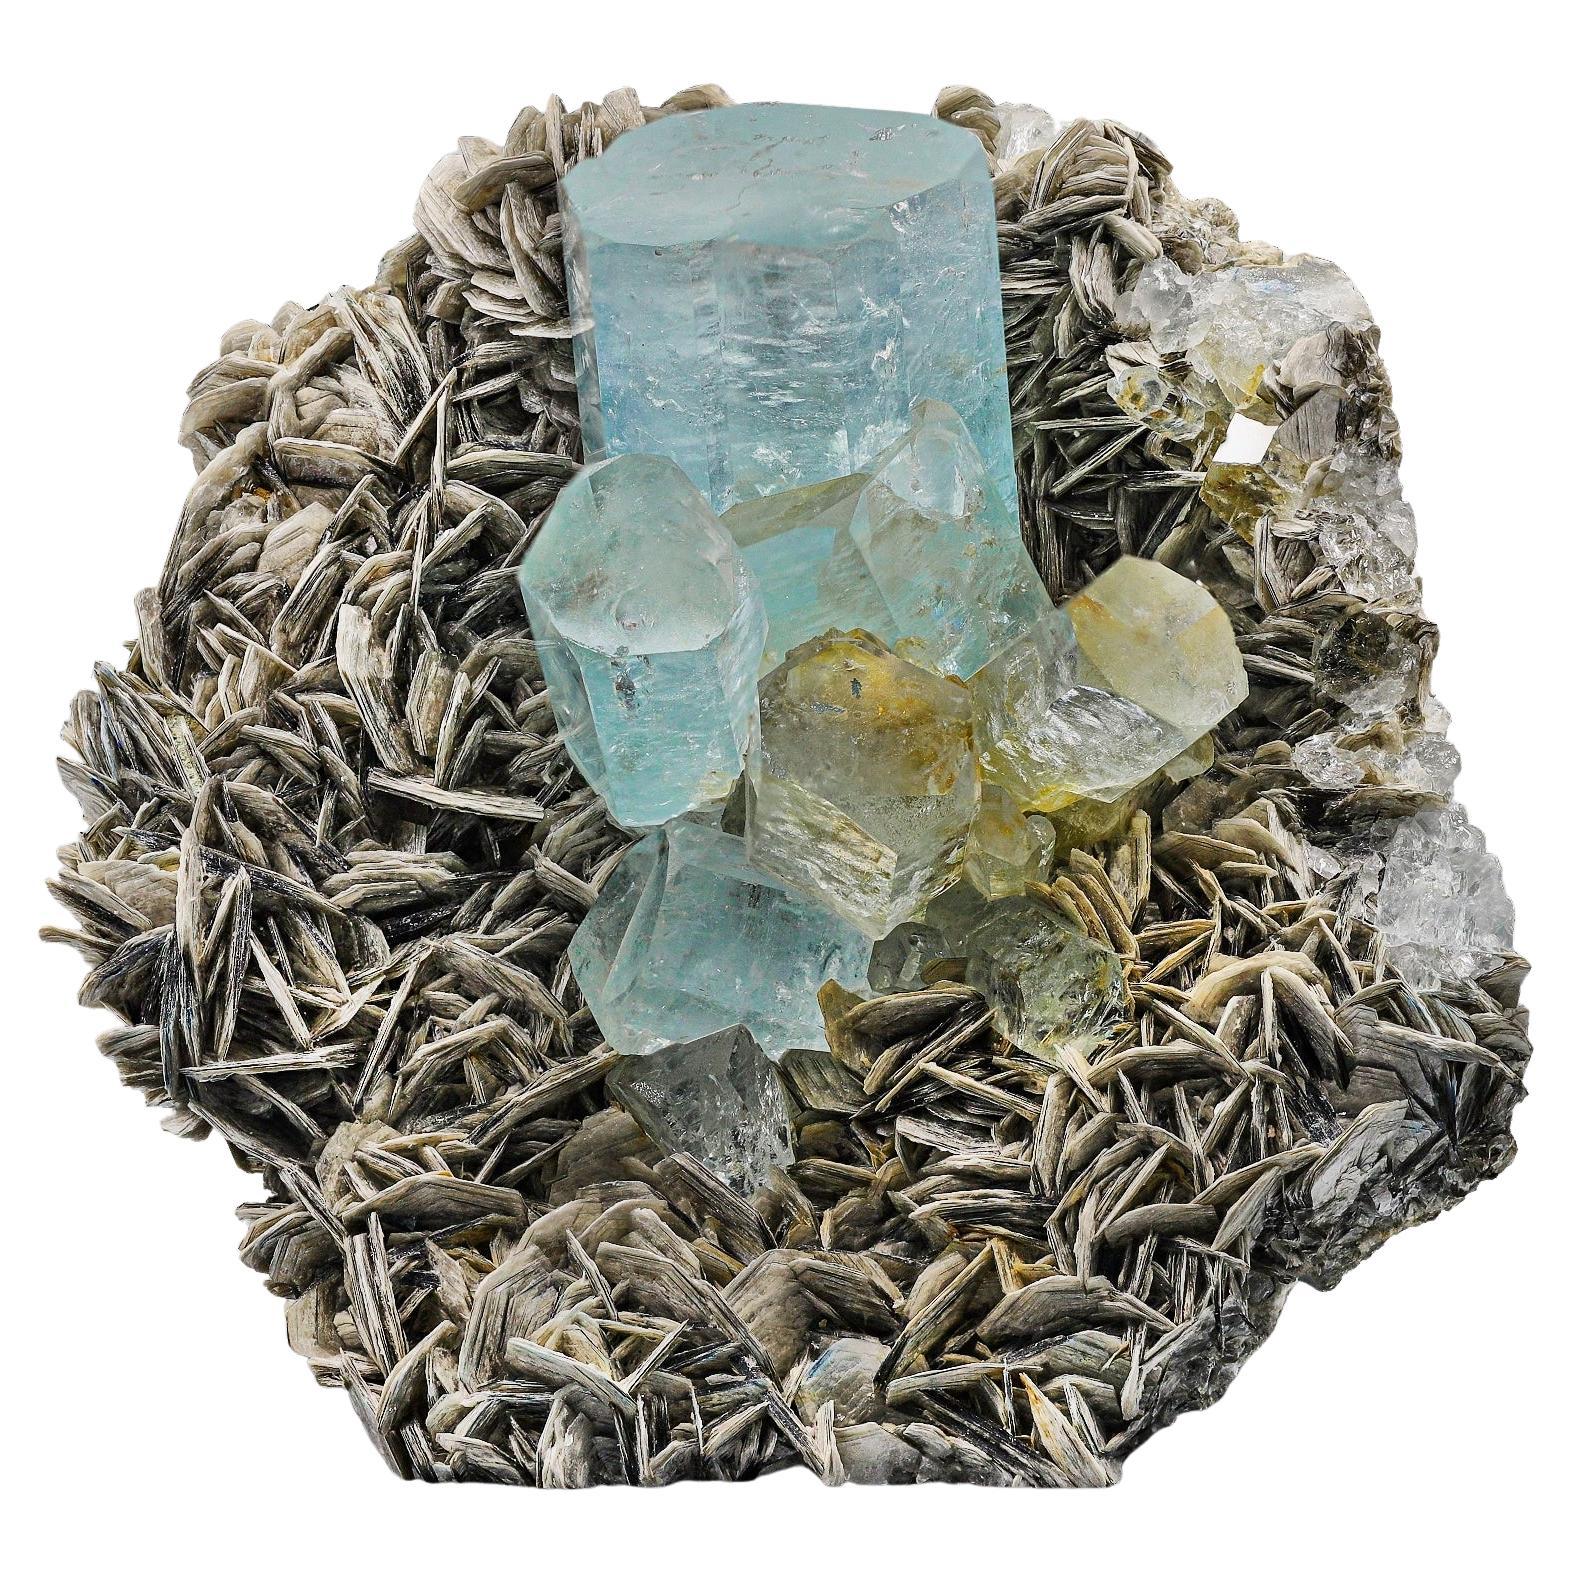 Unique Gem Specimen Aquamarine Crystal Cluster on Muscovite Matrix from Pakistan For Sale